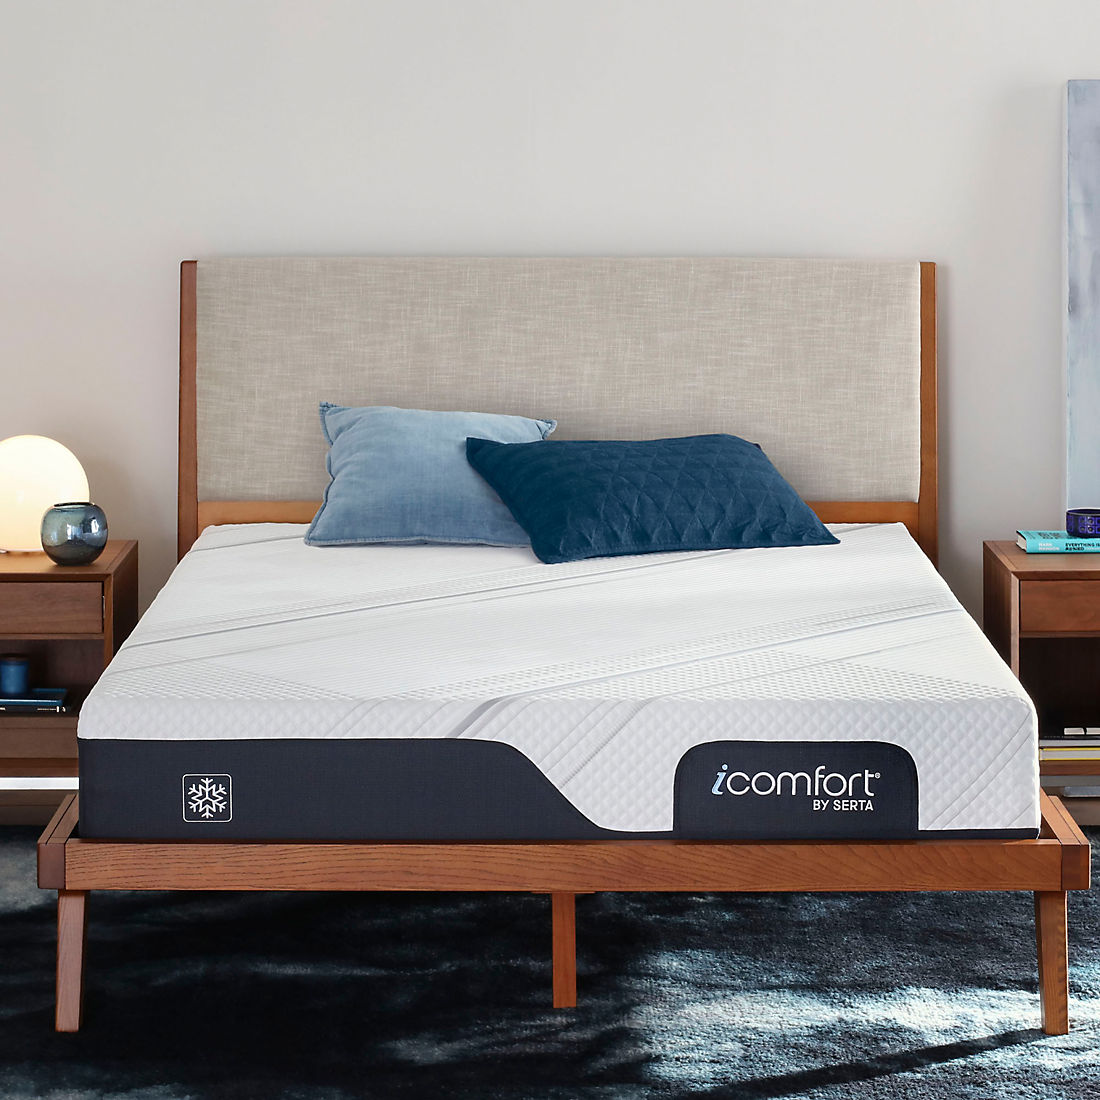 Serta Icomfort Limited Edition, Serta King Bed Frame